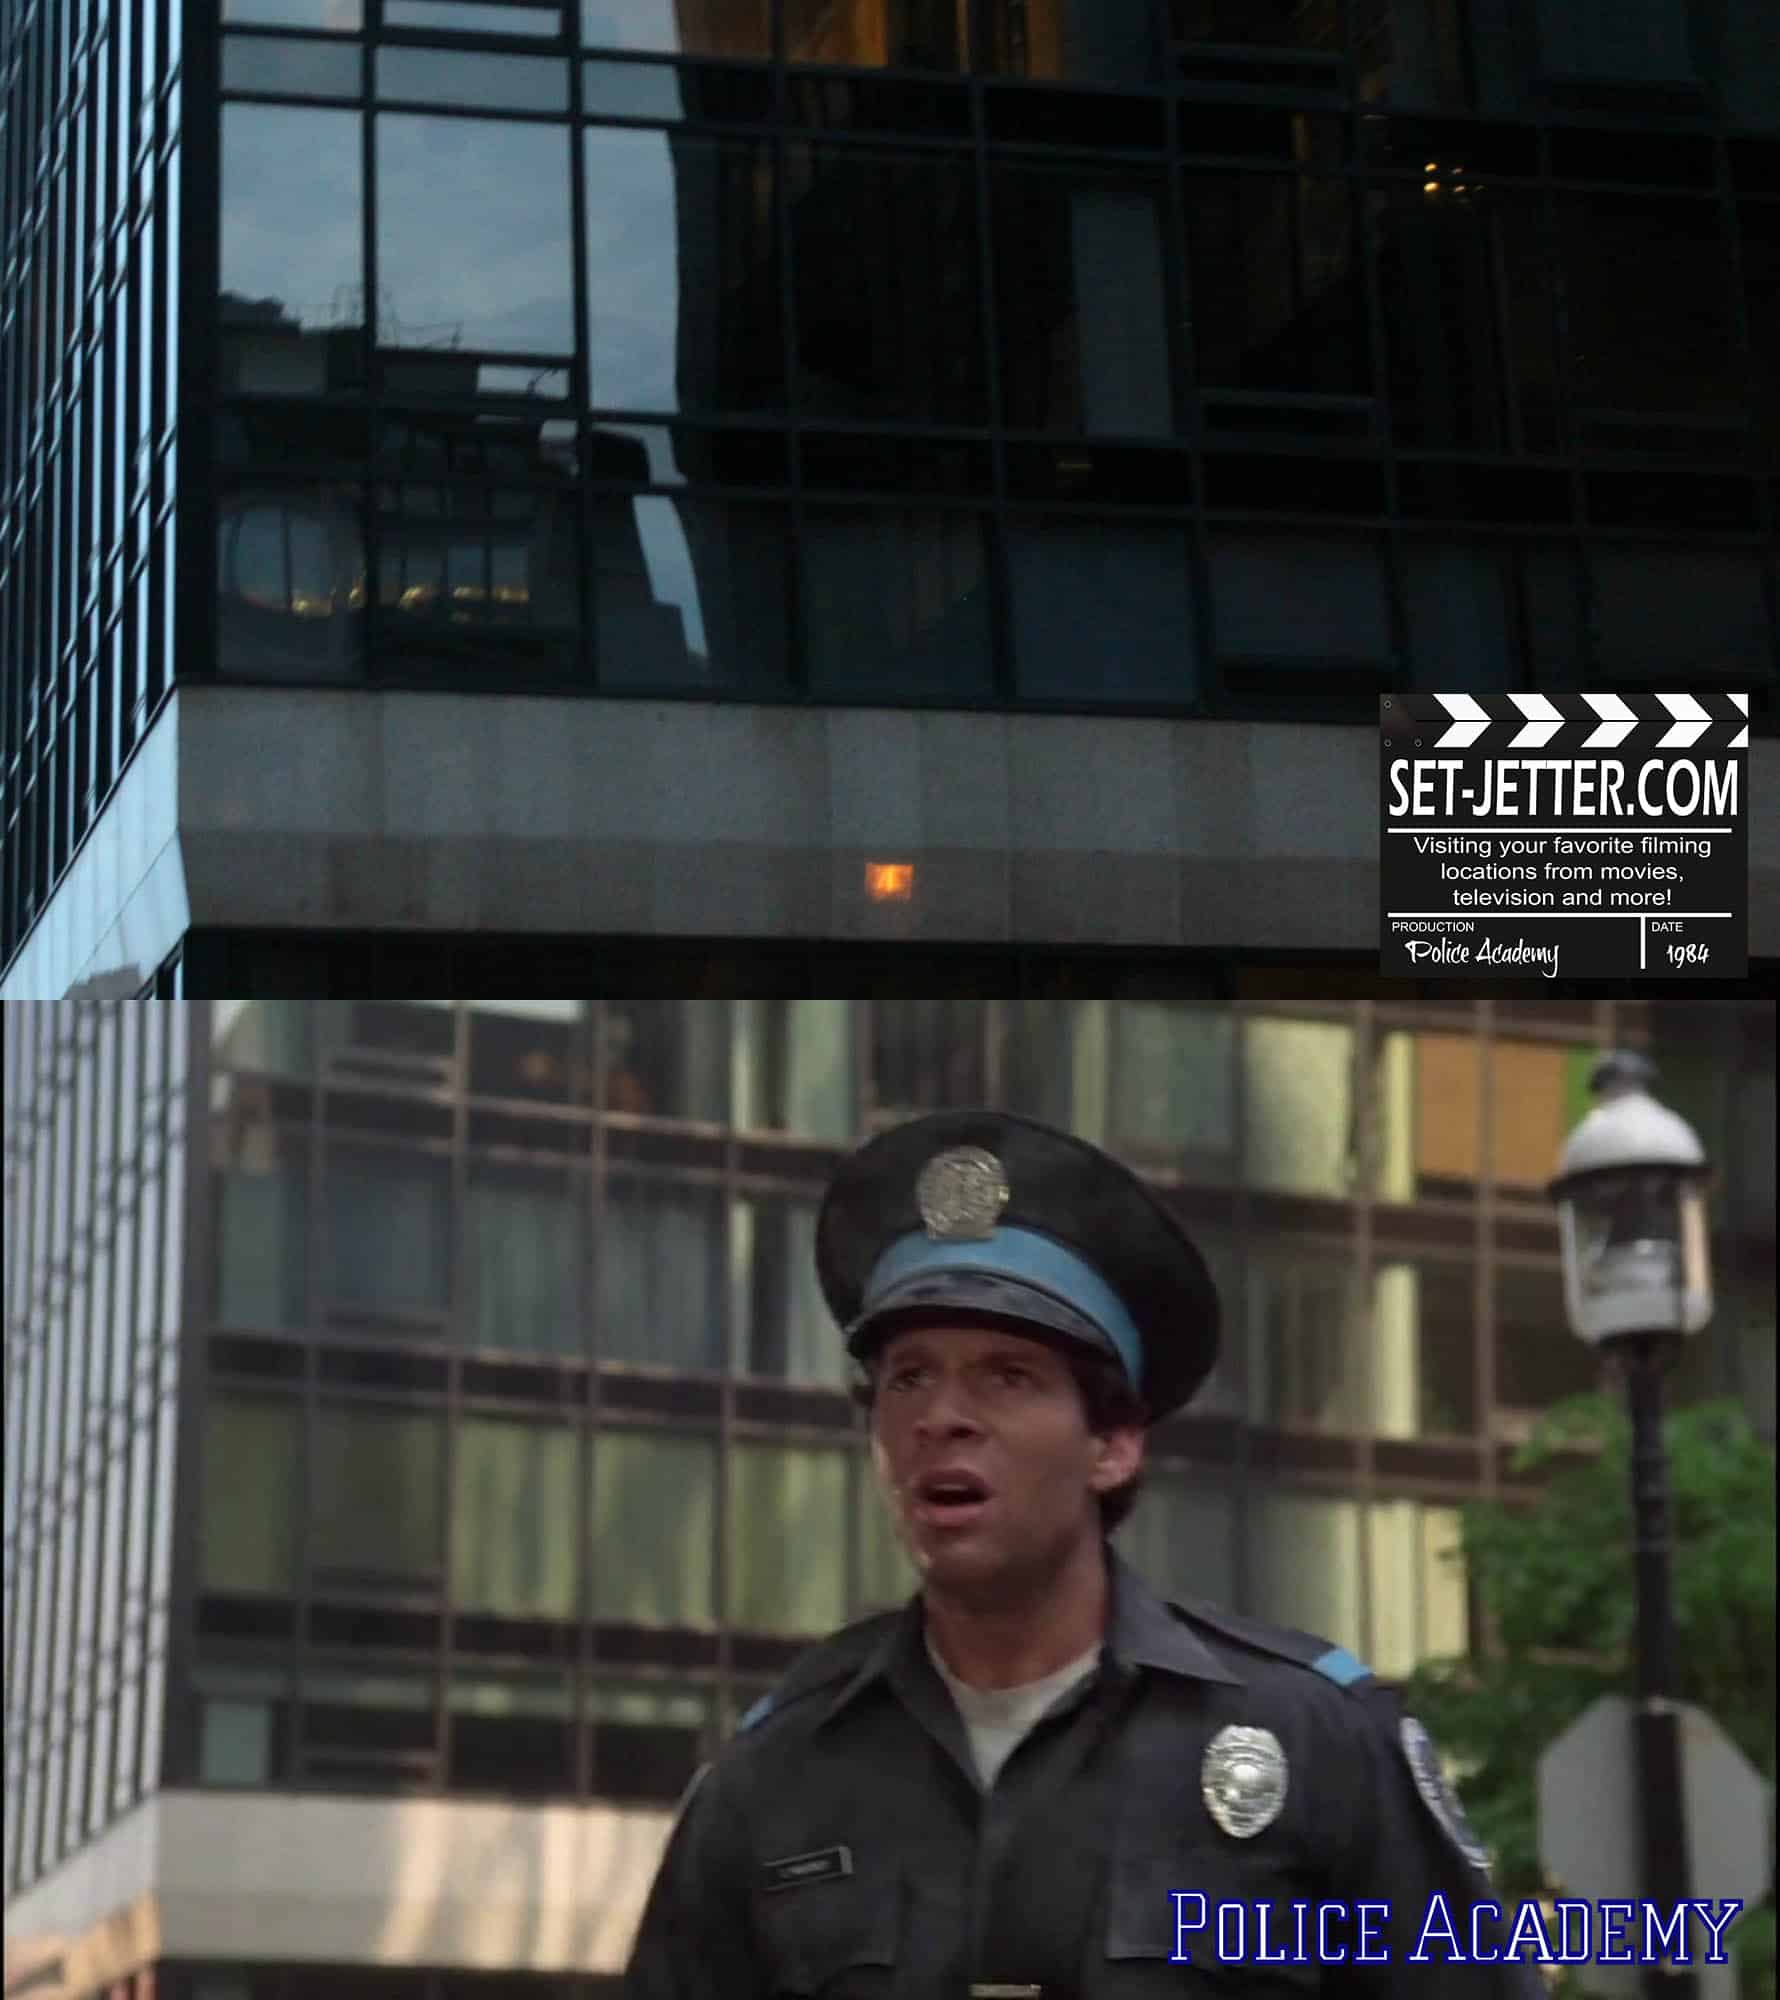 Police Academy (1984)  Set